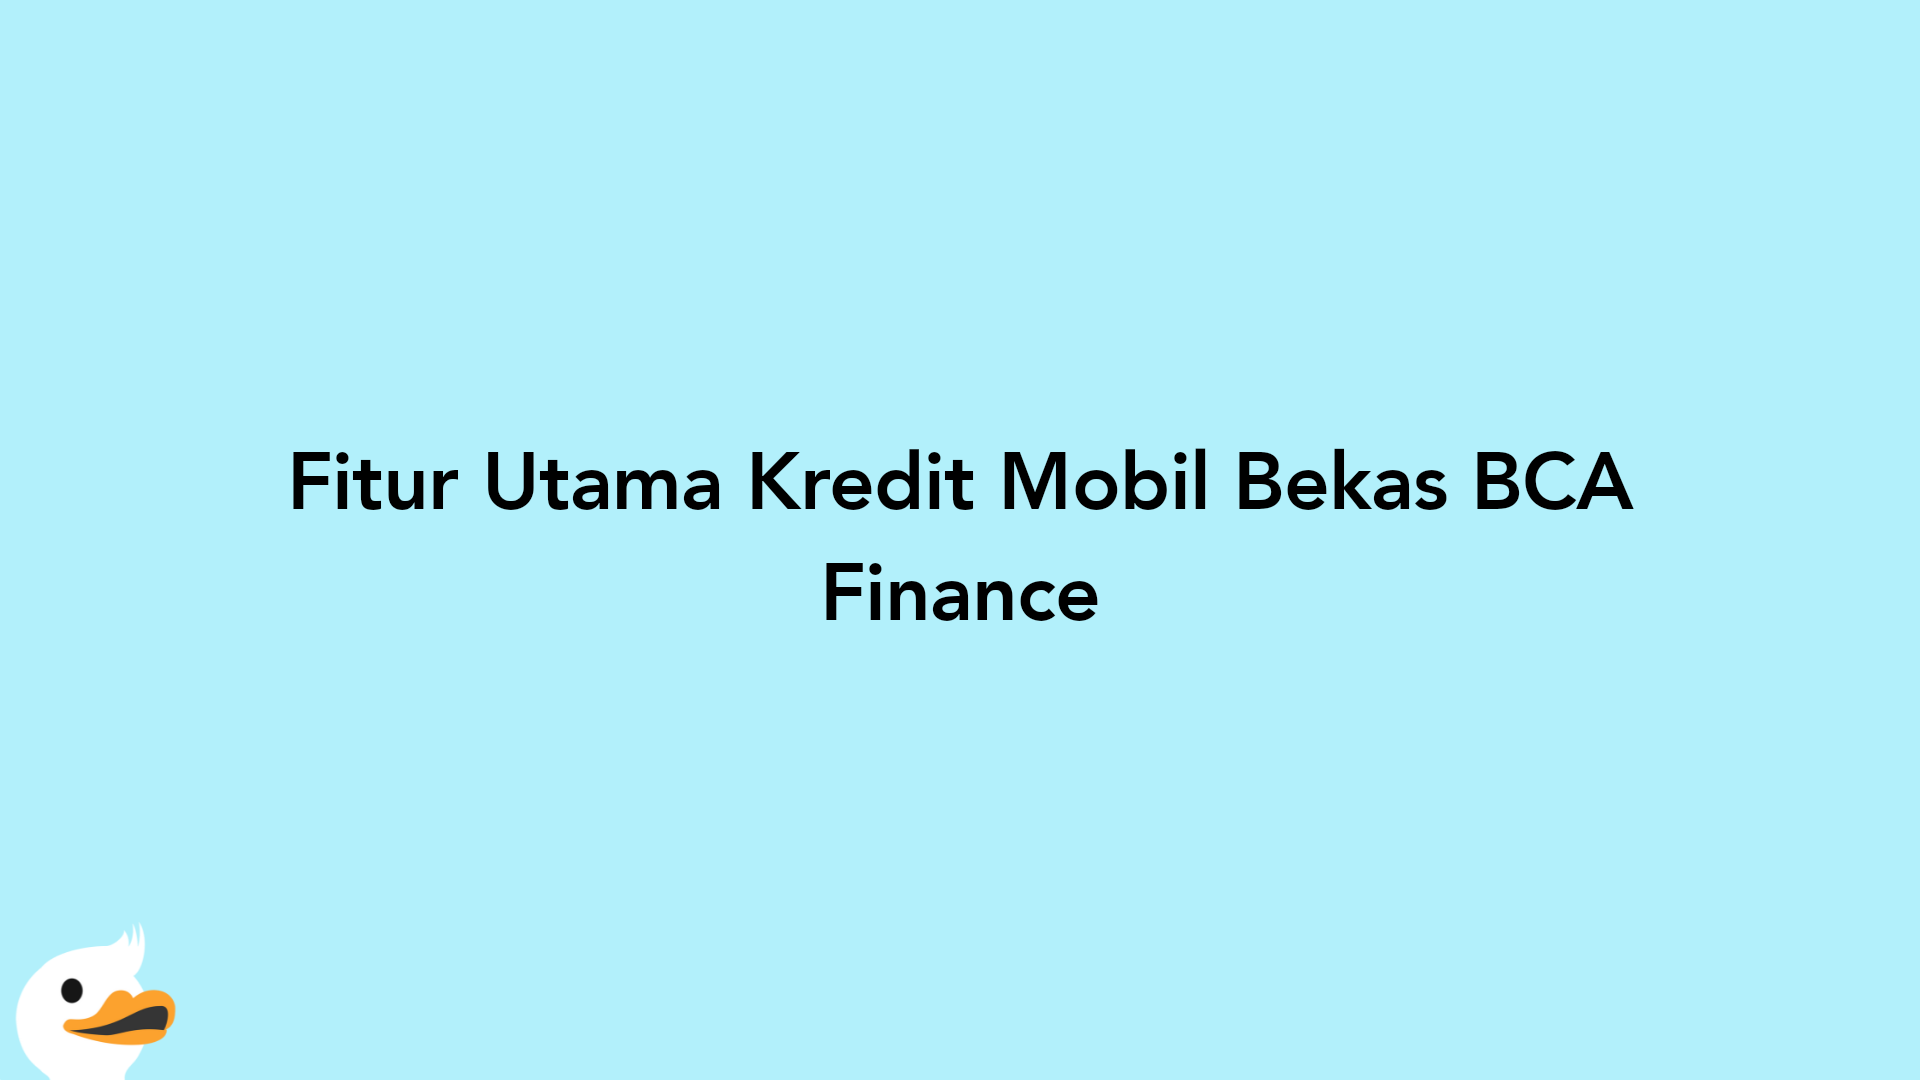 Fitur Utama Kredit Mobil Bekas BCA Finance